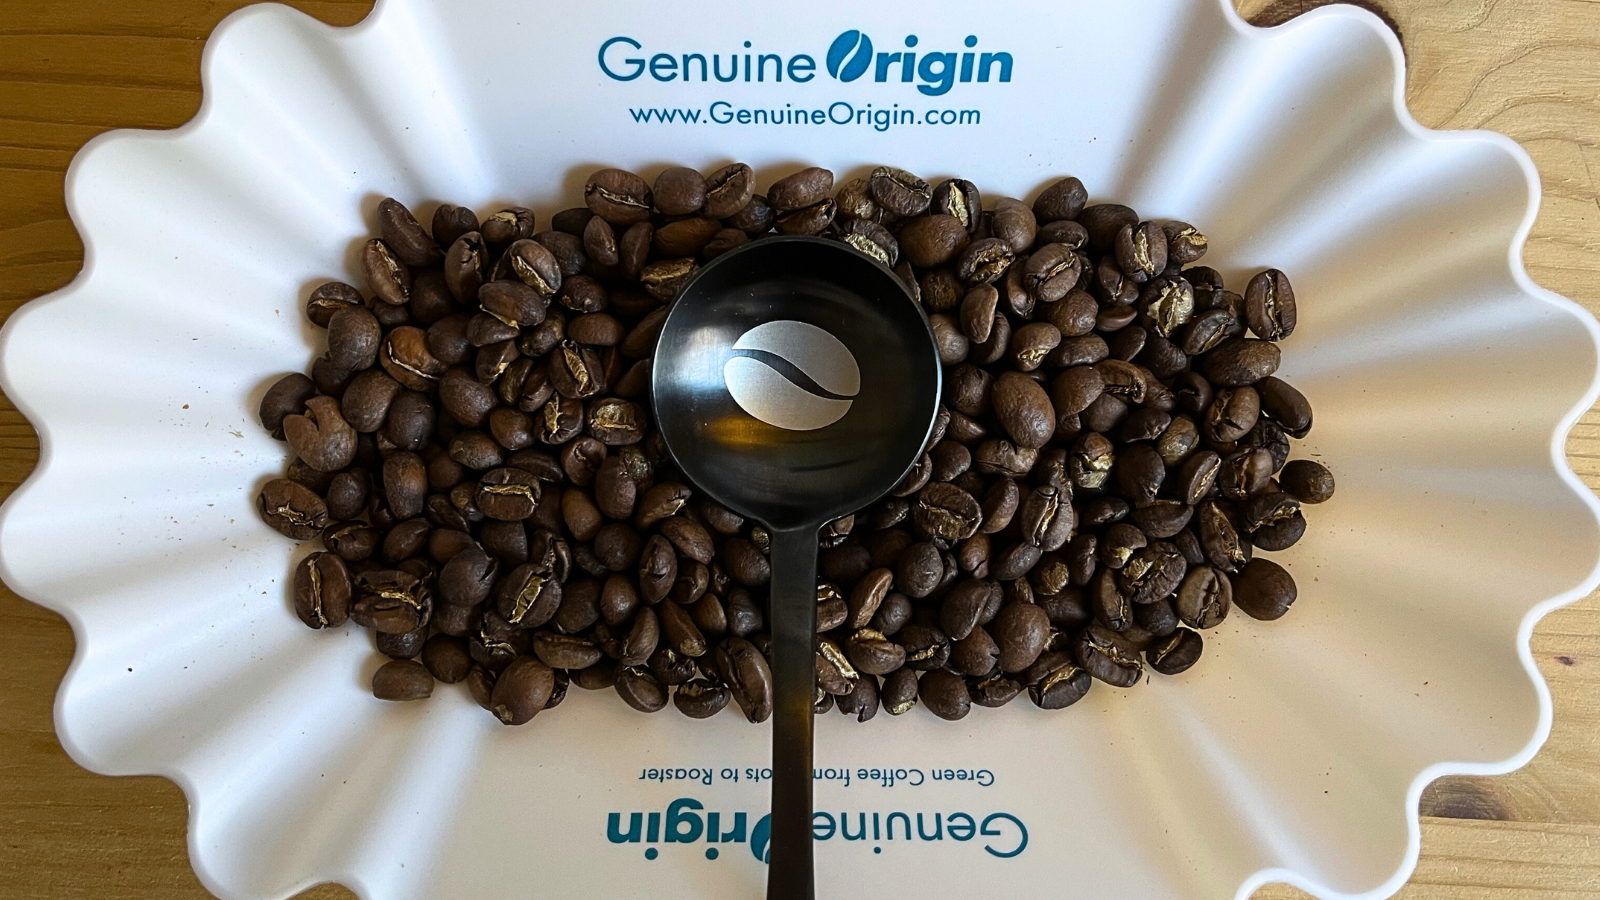 Custom Genuine Origin matte black coffee cupping spoon in white Genuine Origin coffee cupping tray resting on fresh roasted coffee